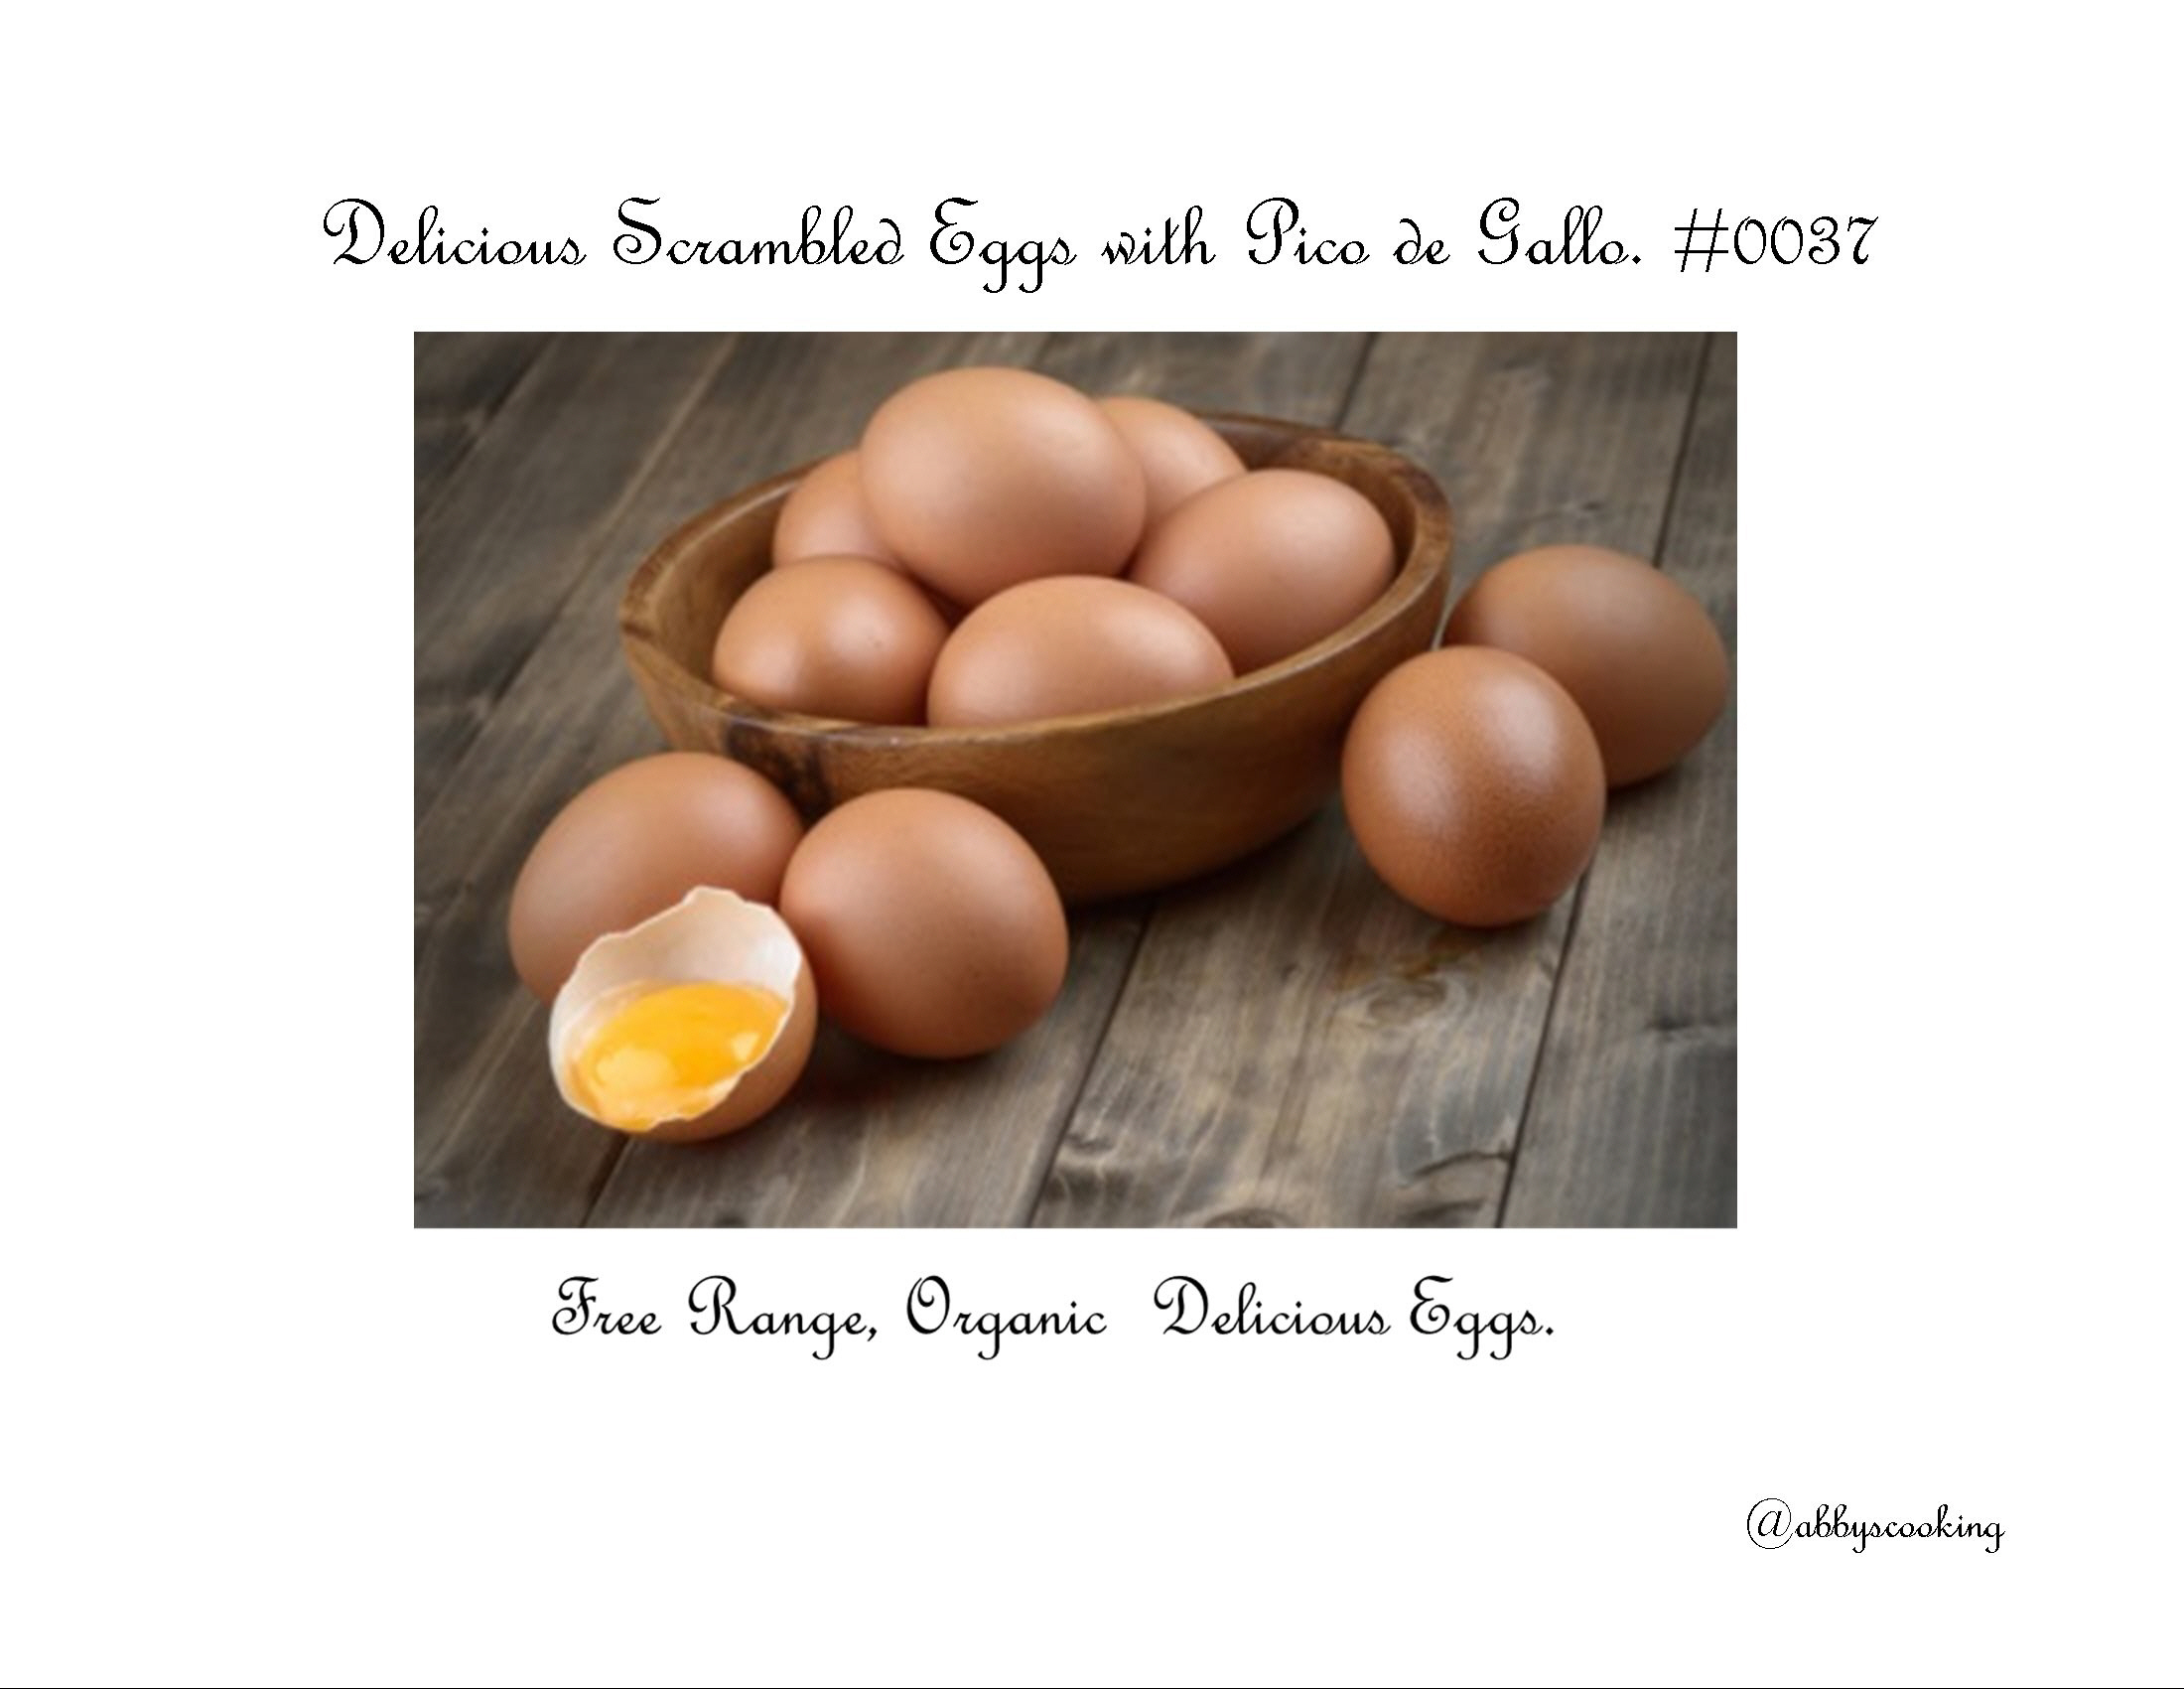 1 Scramble eggs in pico de gallo vid.jpg